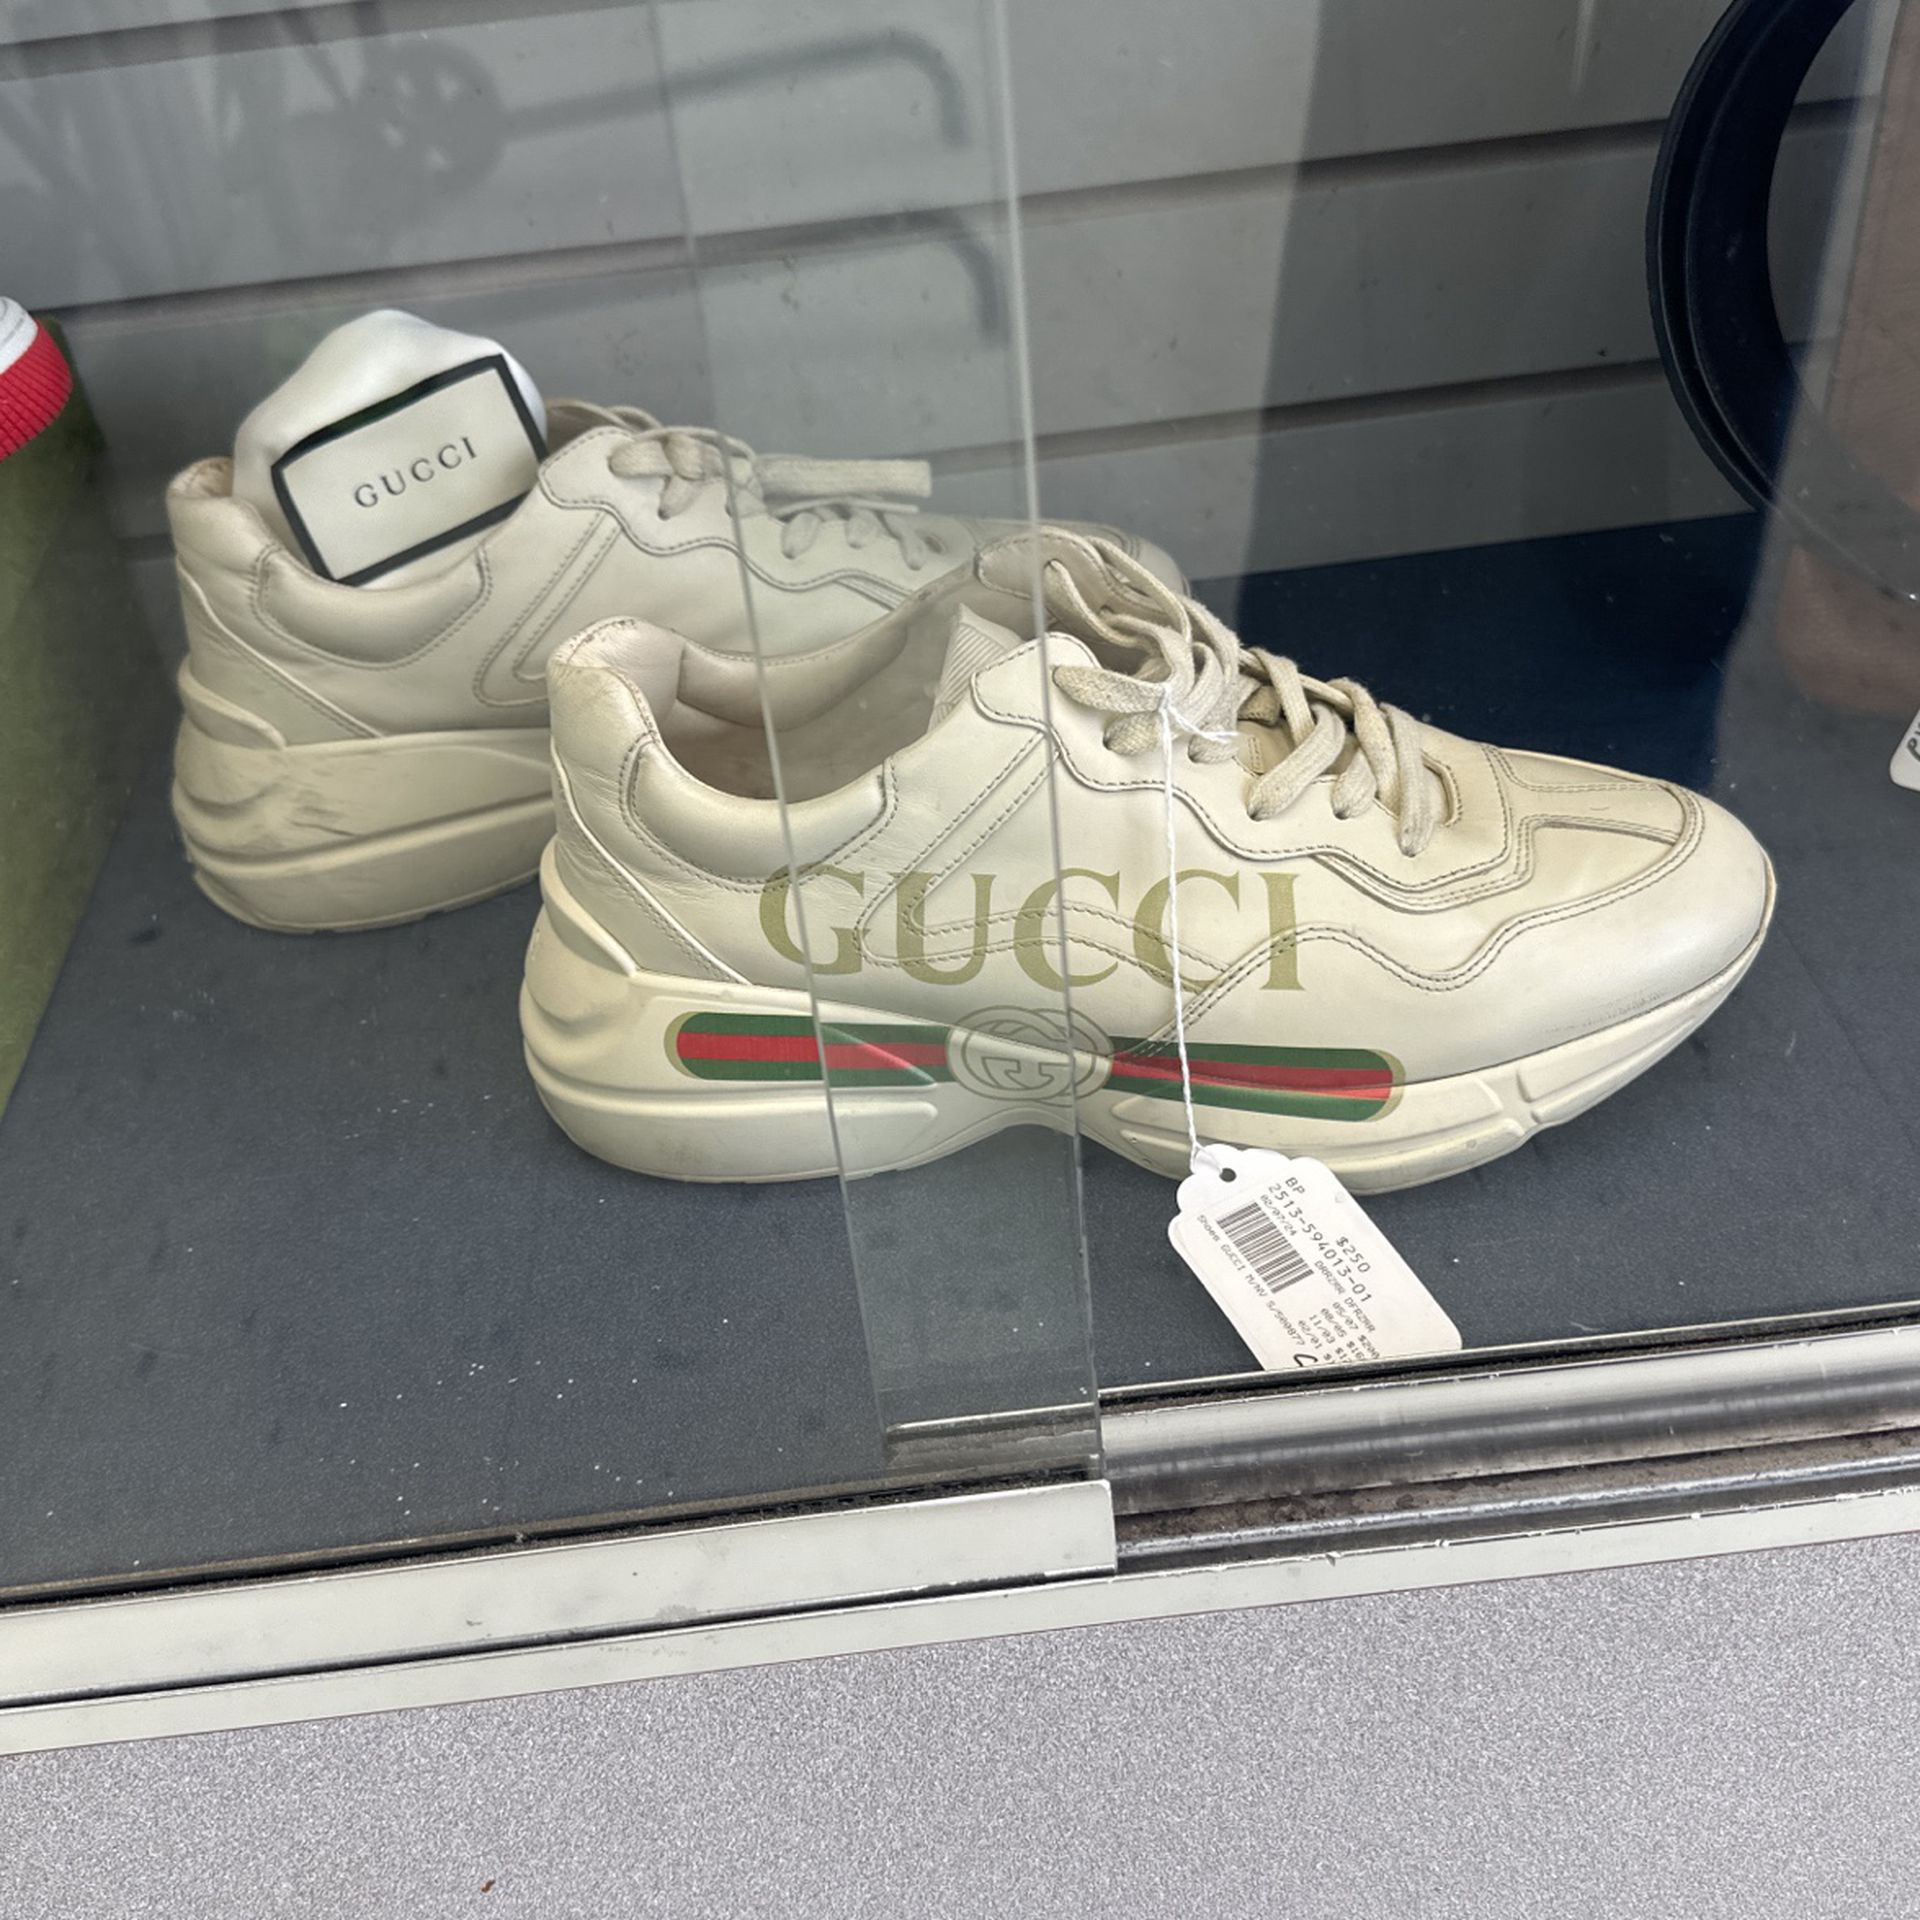 Gucci Shoes Size 8 